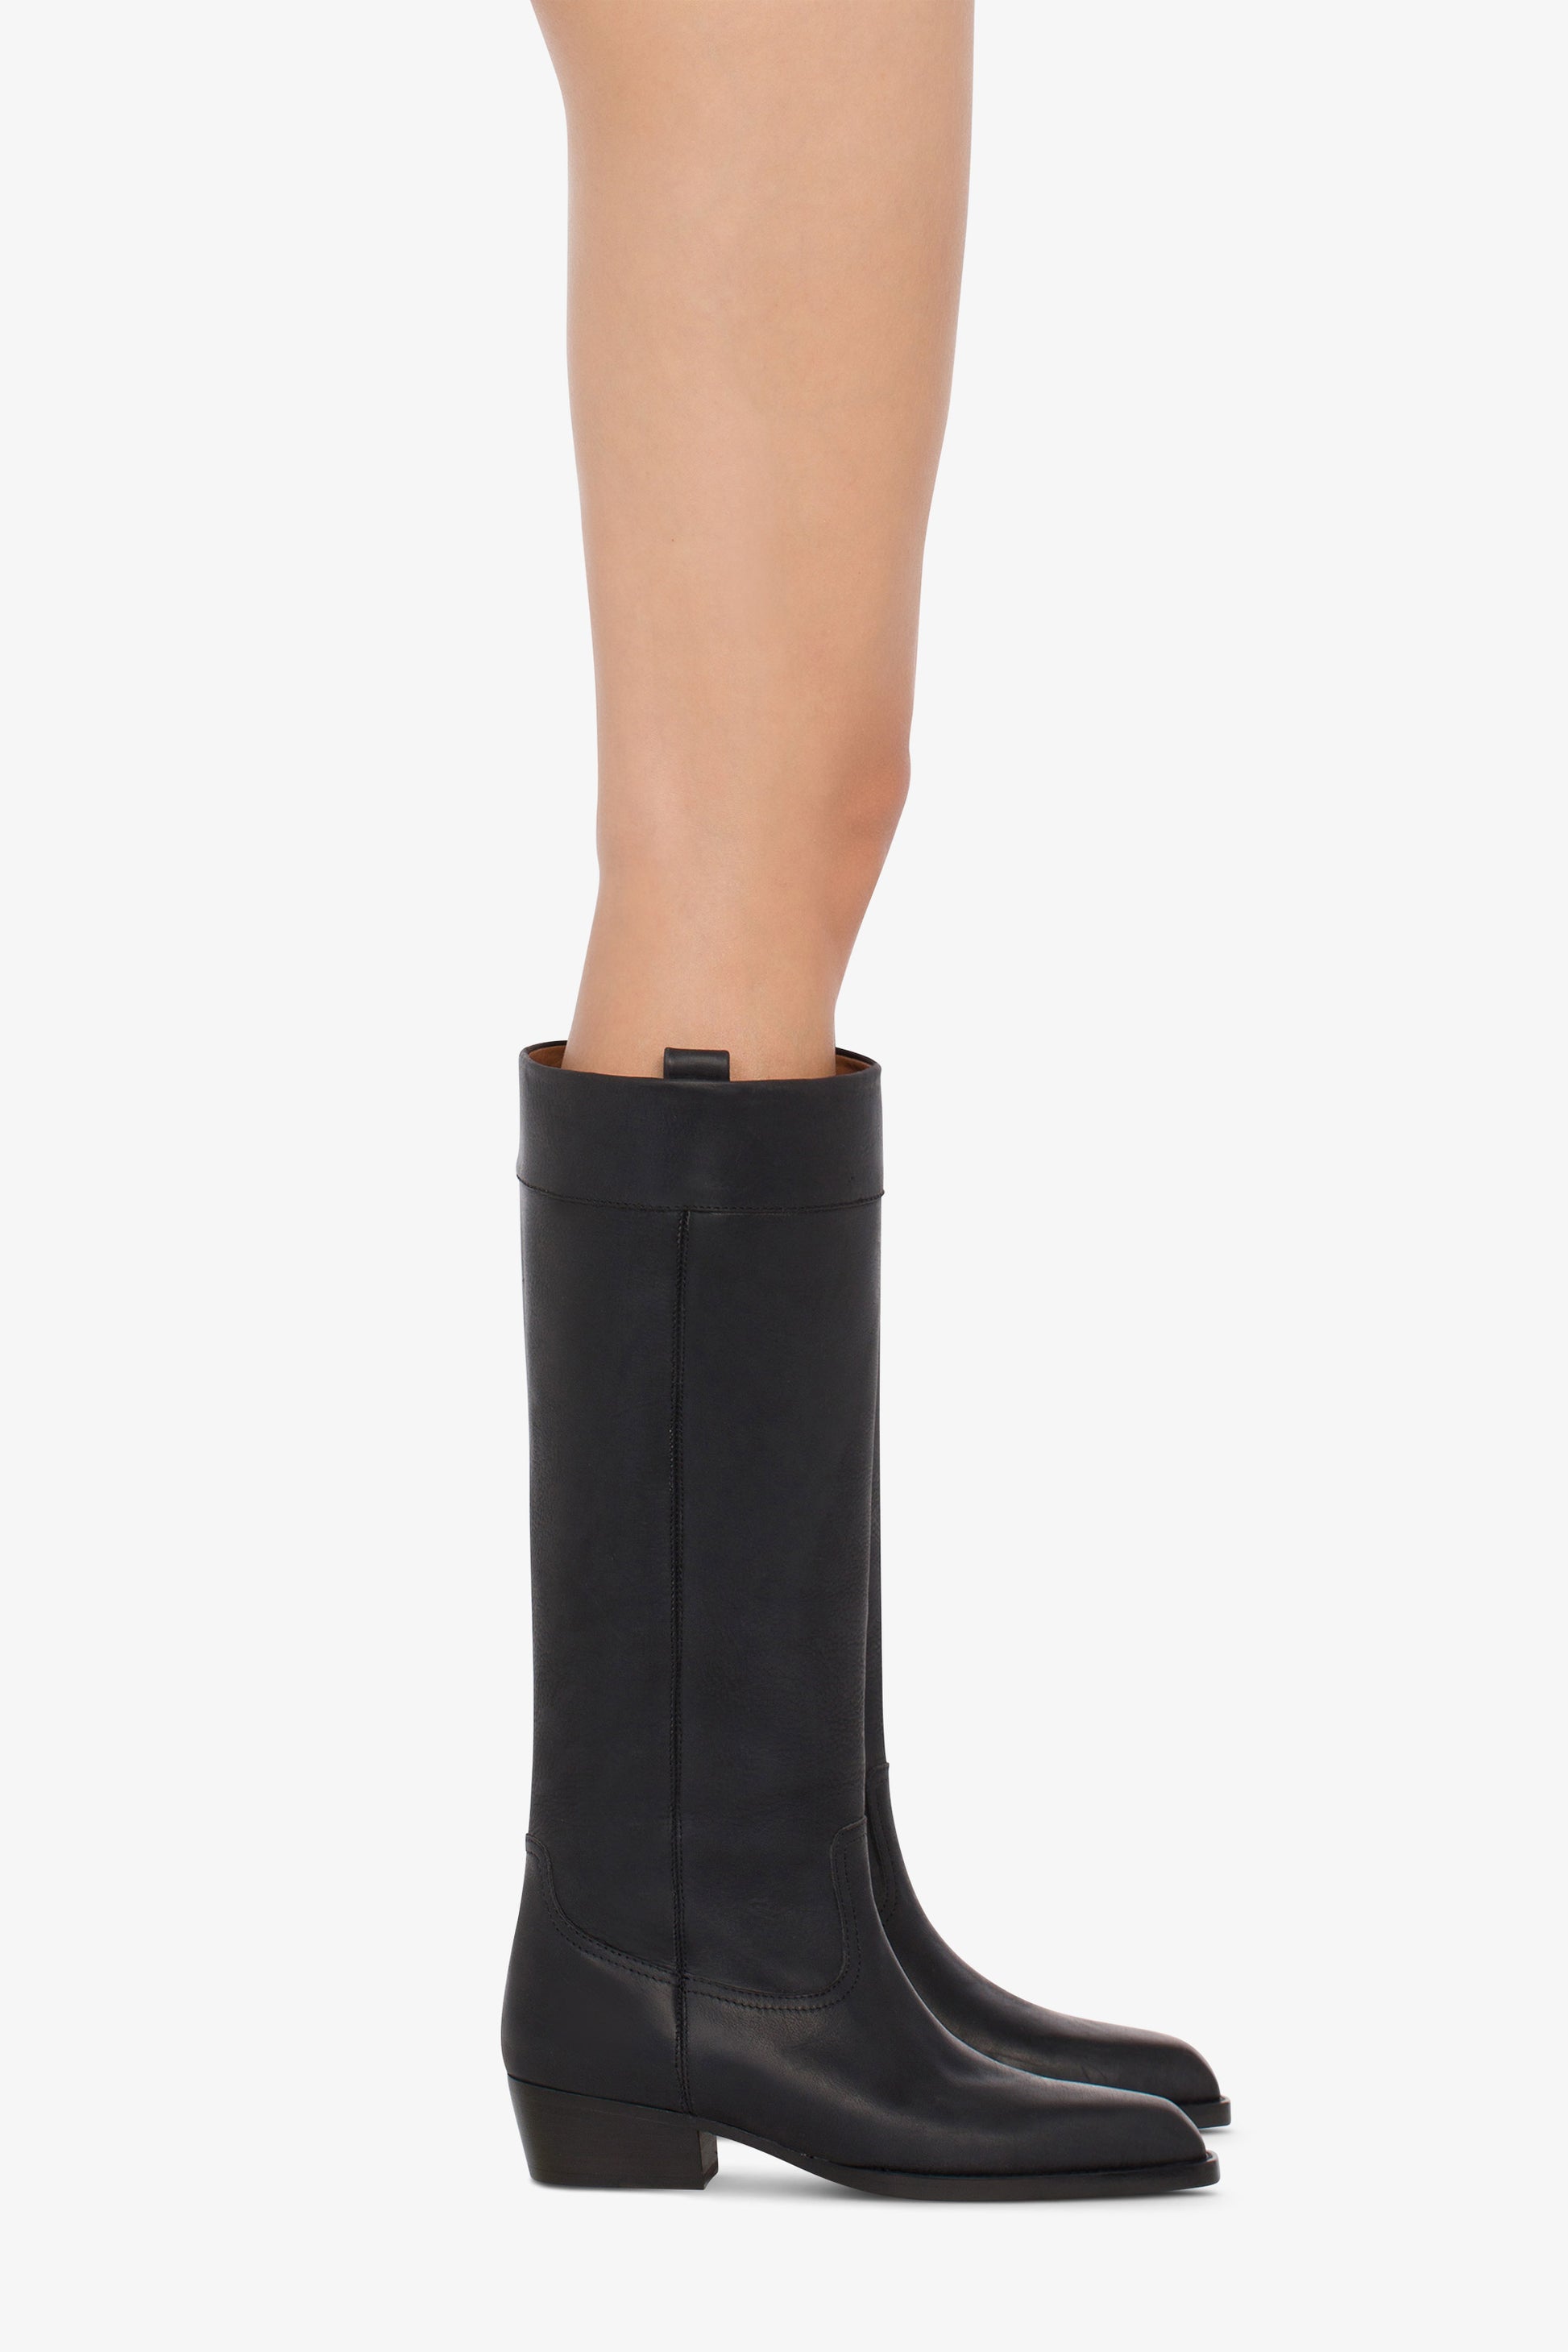 Calf-length boots in soft black pebble leather - Produkt getragen